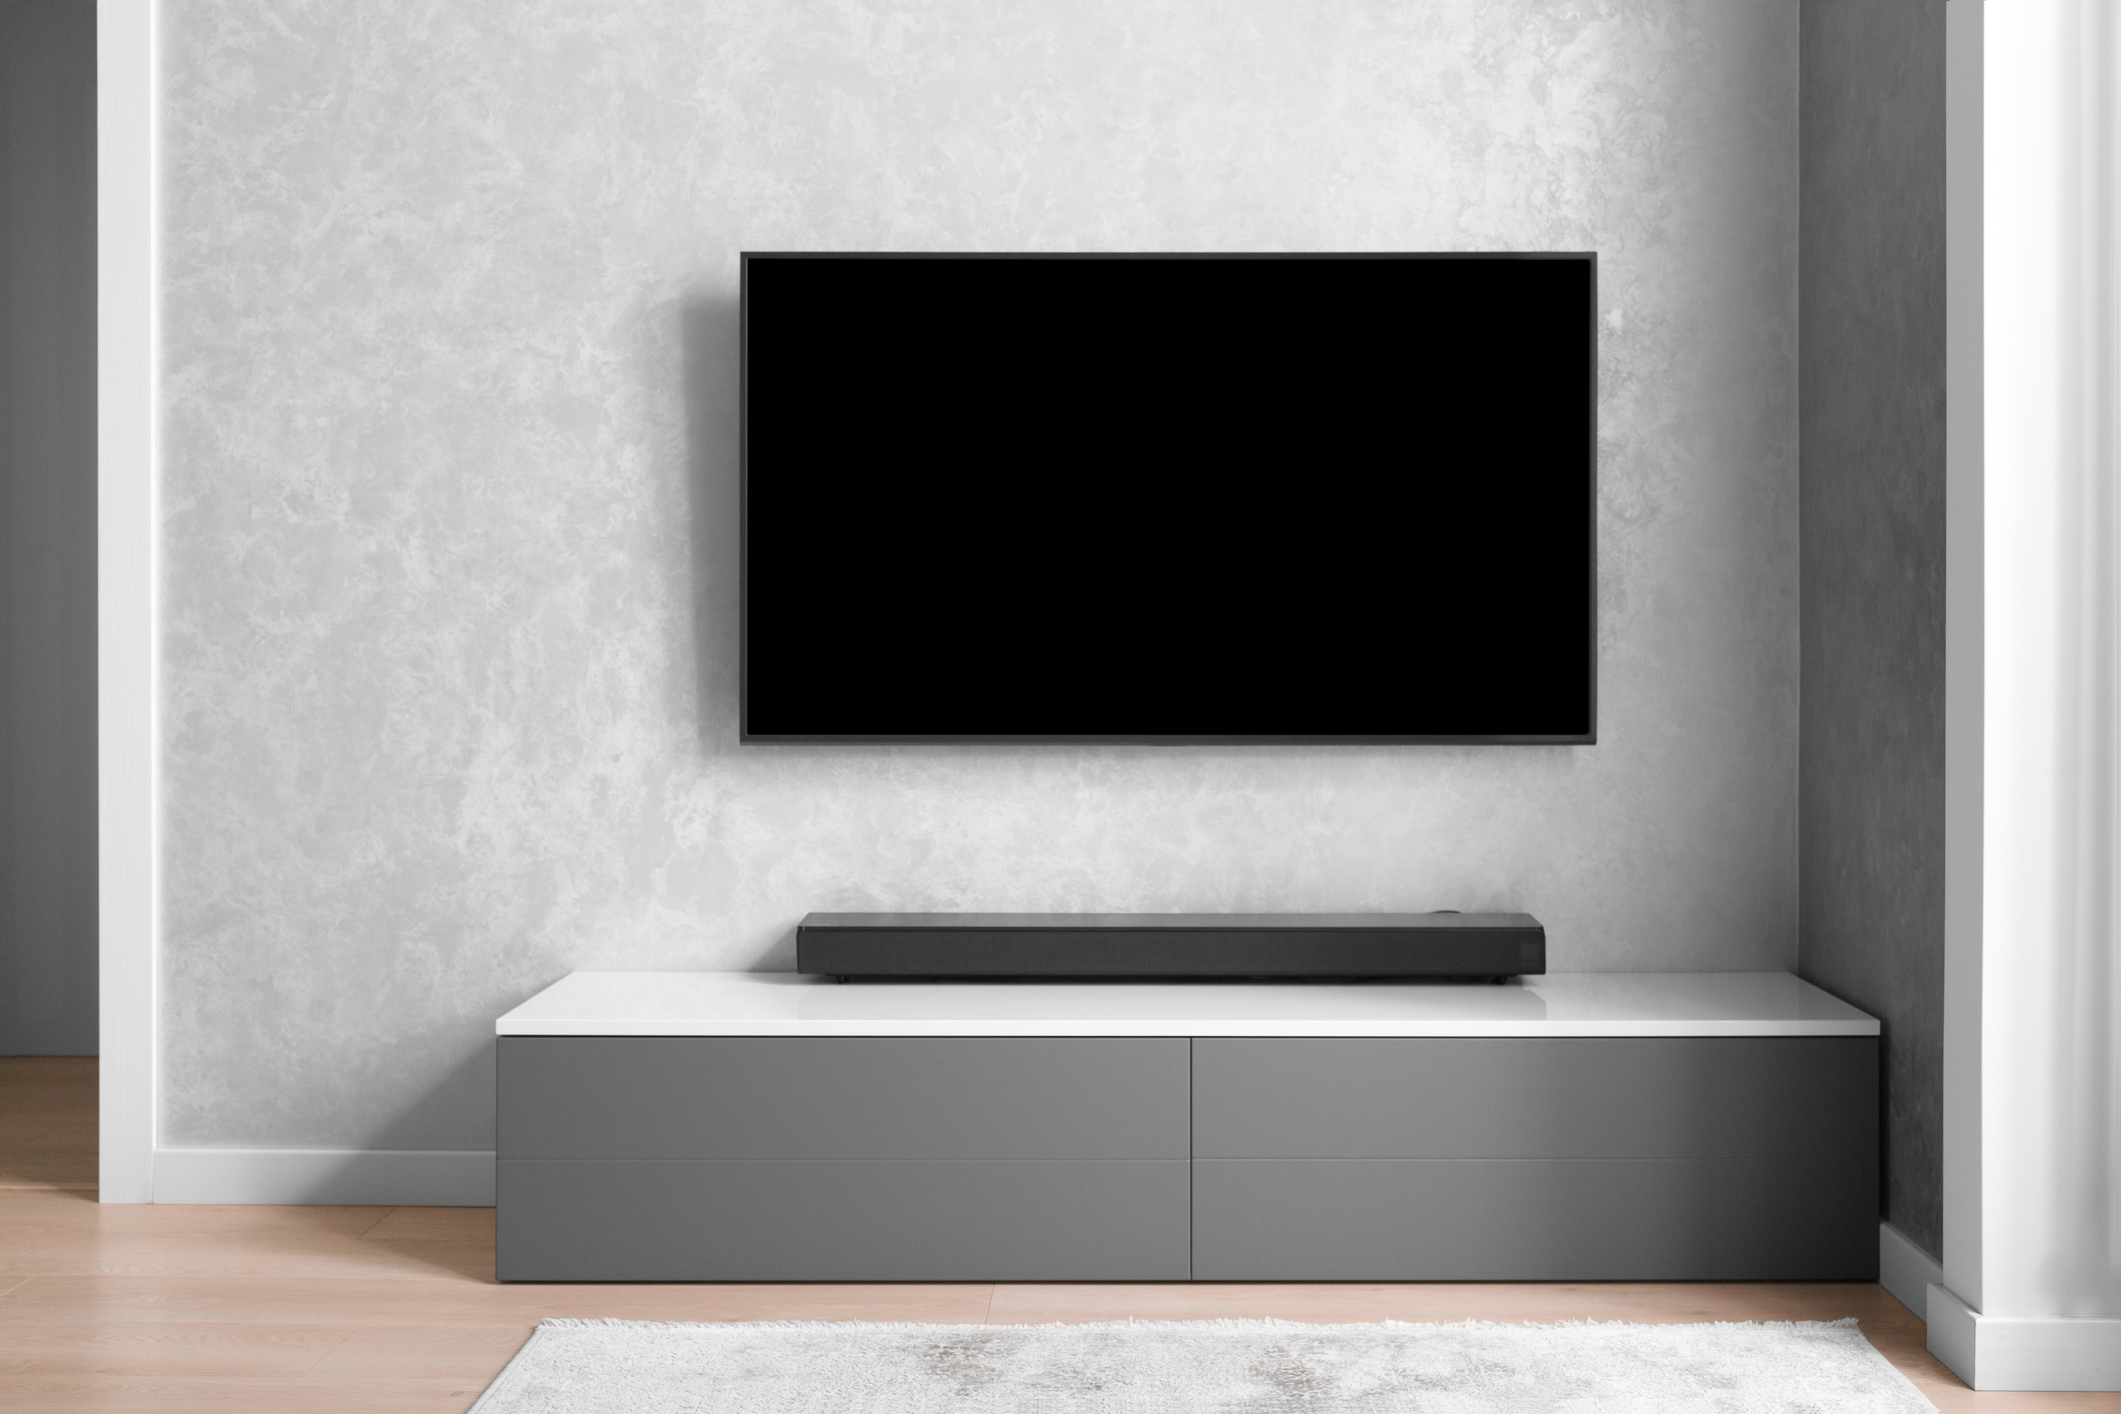 6 soundbars to turn your living room into a true home theatre